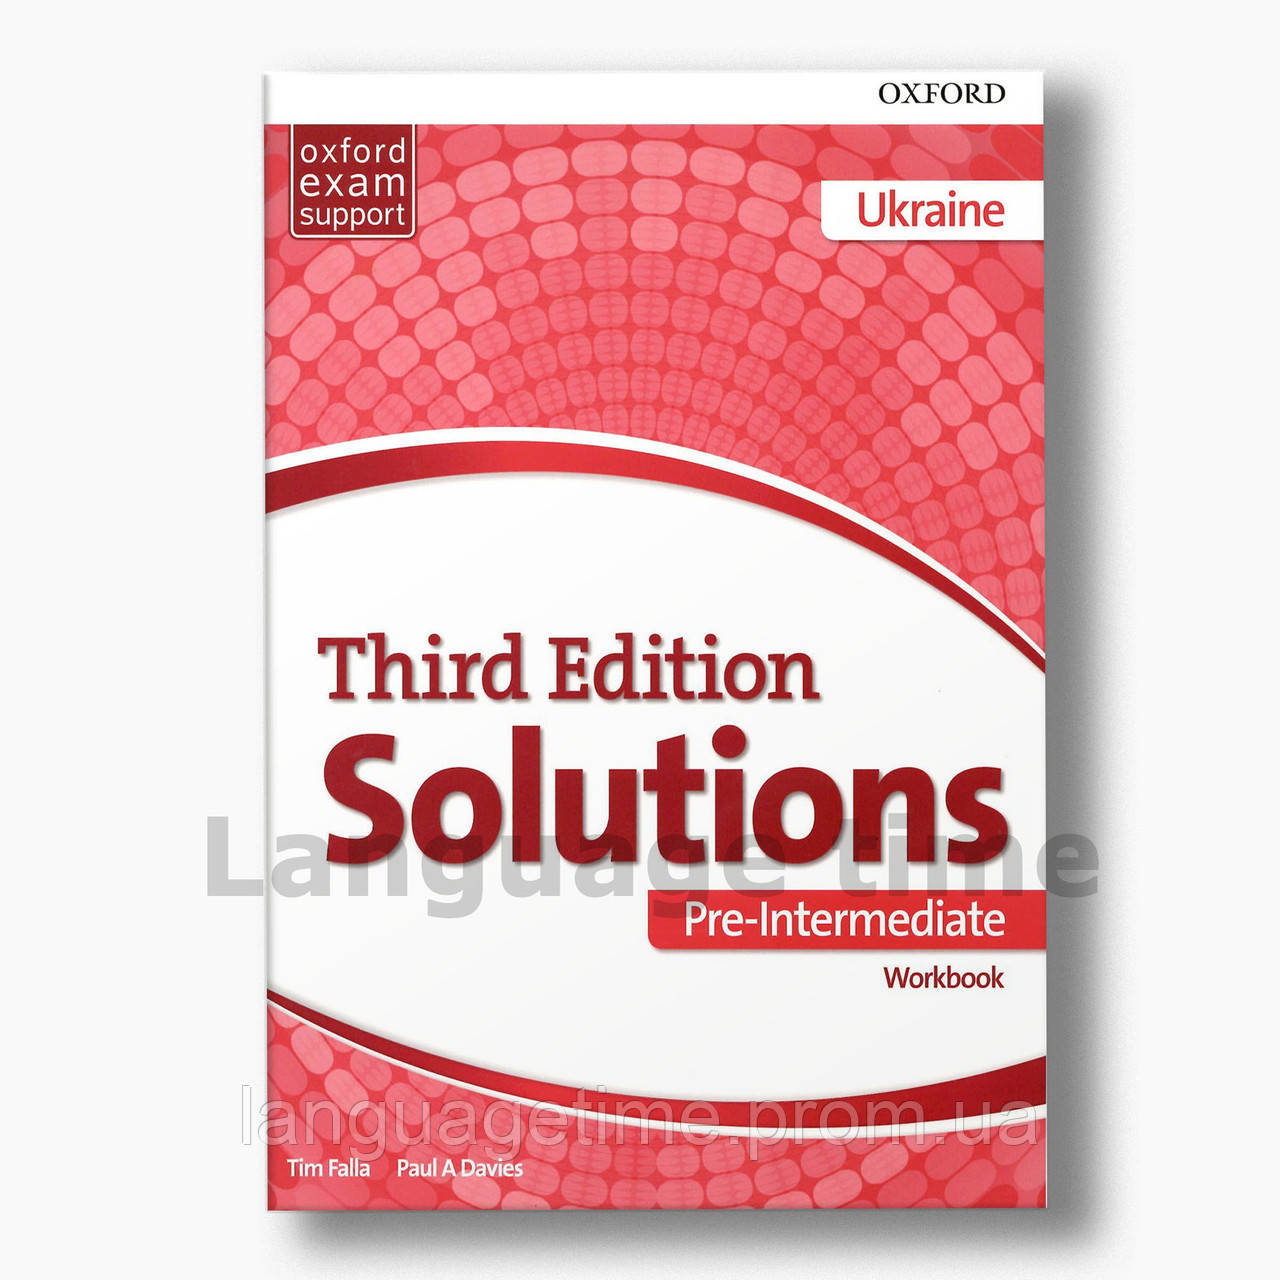 Solutions pre Intermediate 3rd Edition Audio. Solutions pre-Intermediate 3rd Edition Workbook Audio.